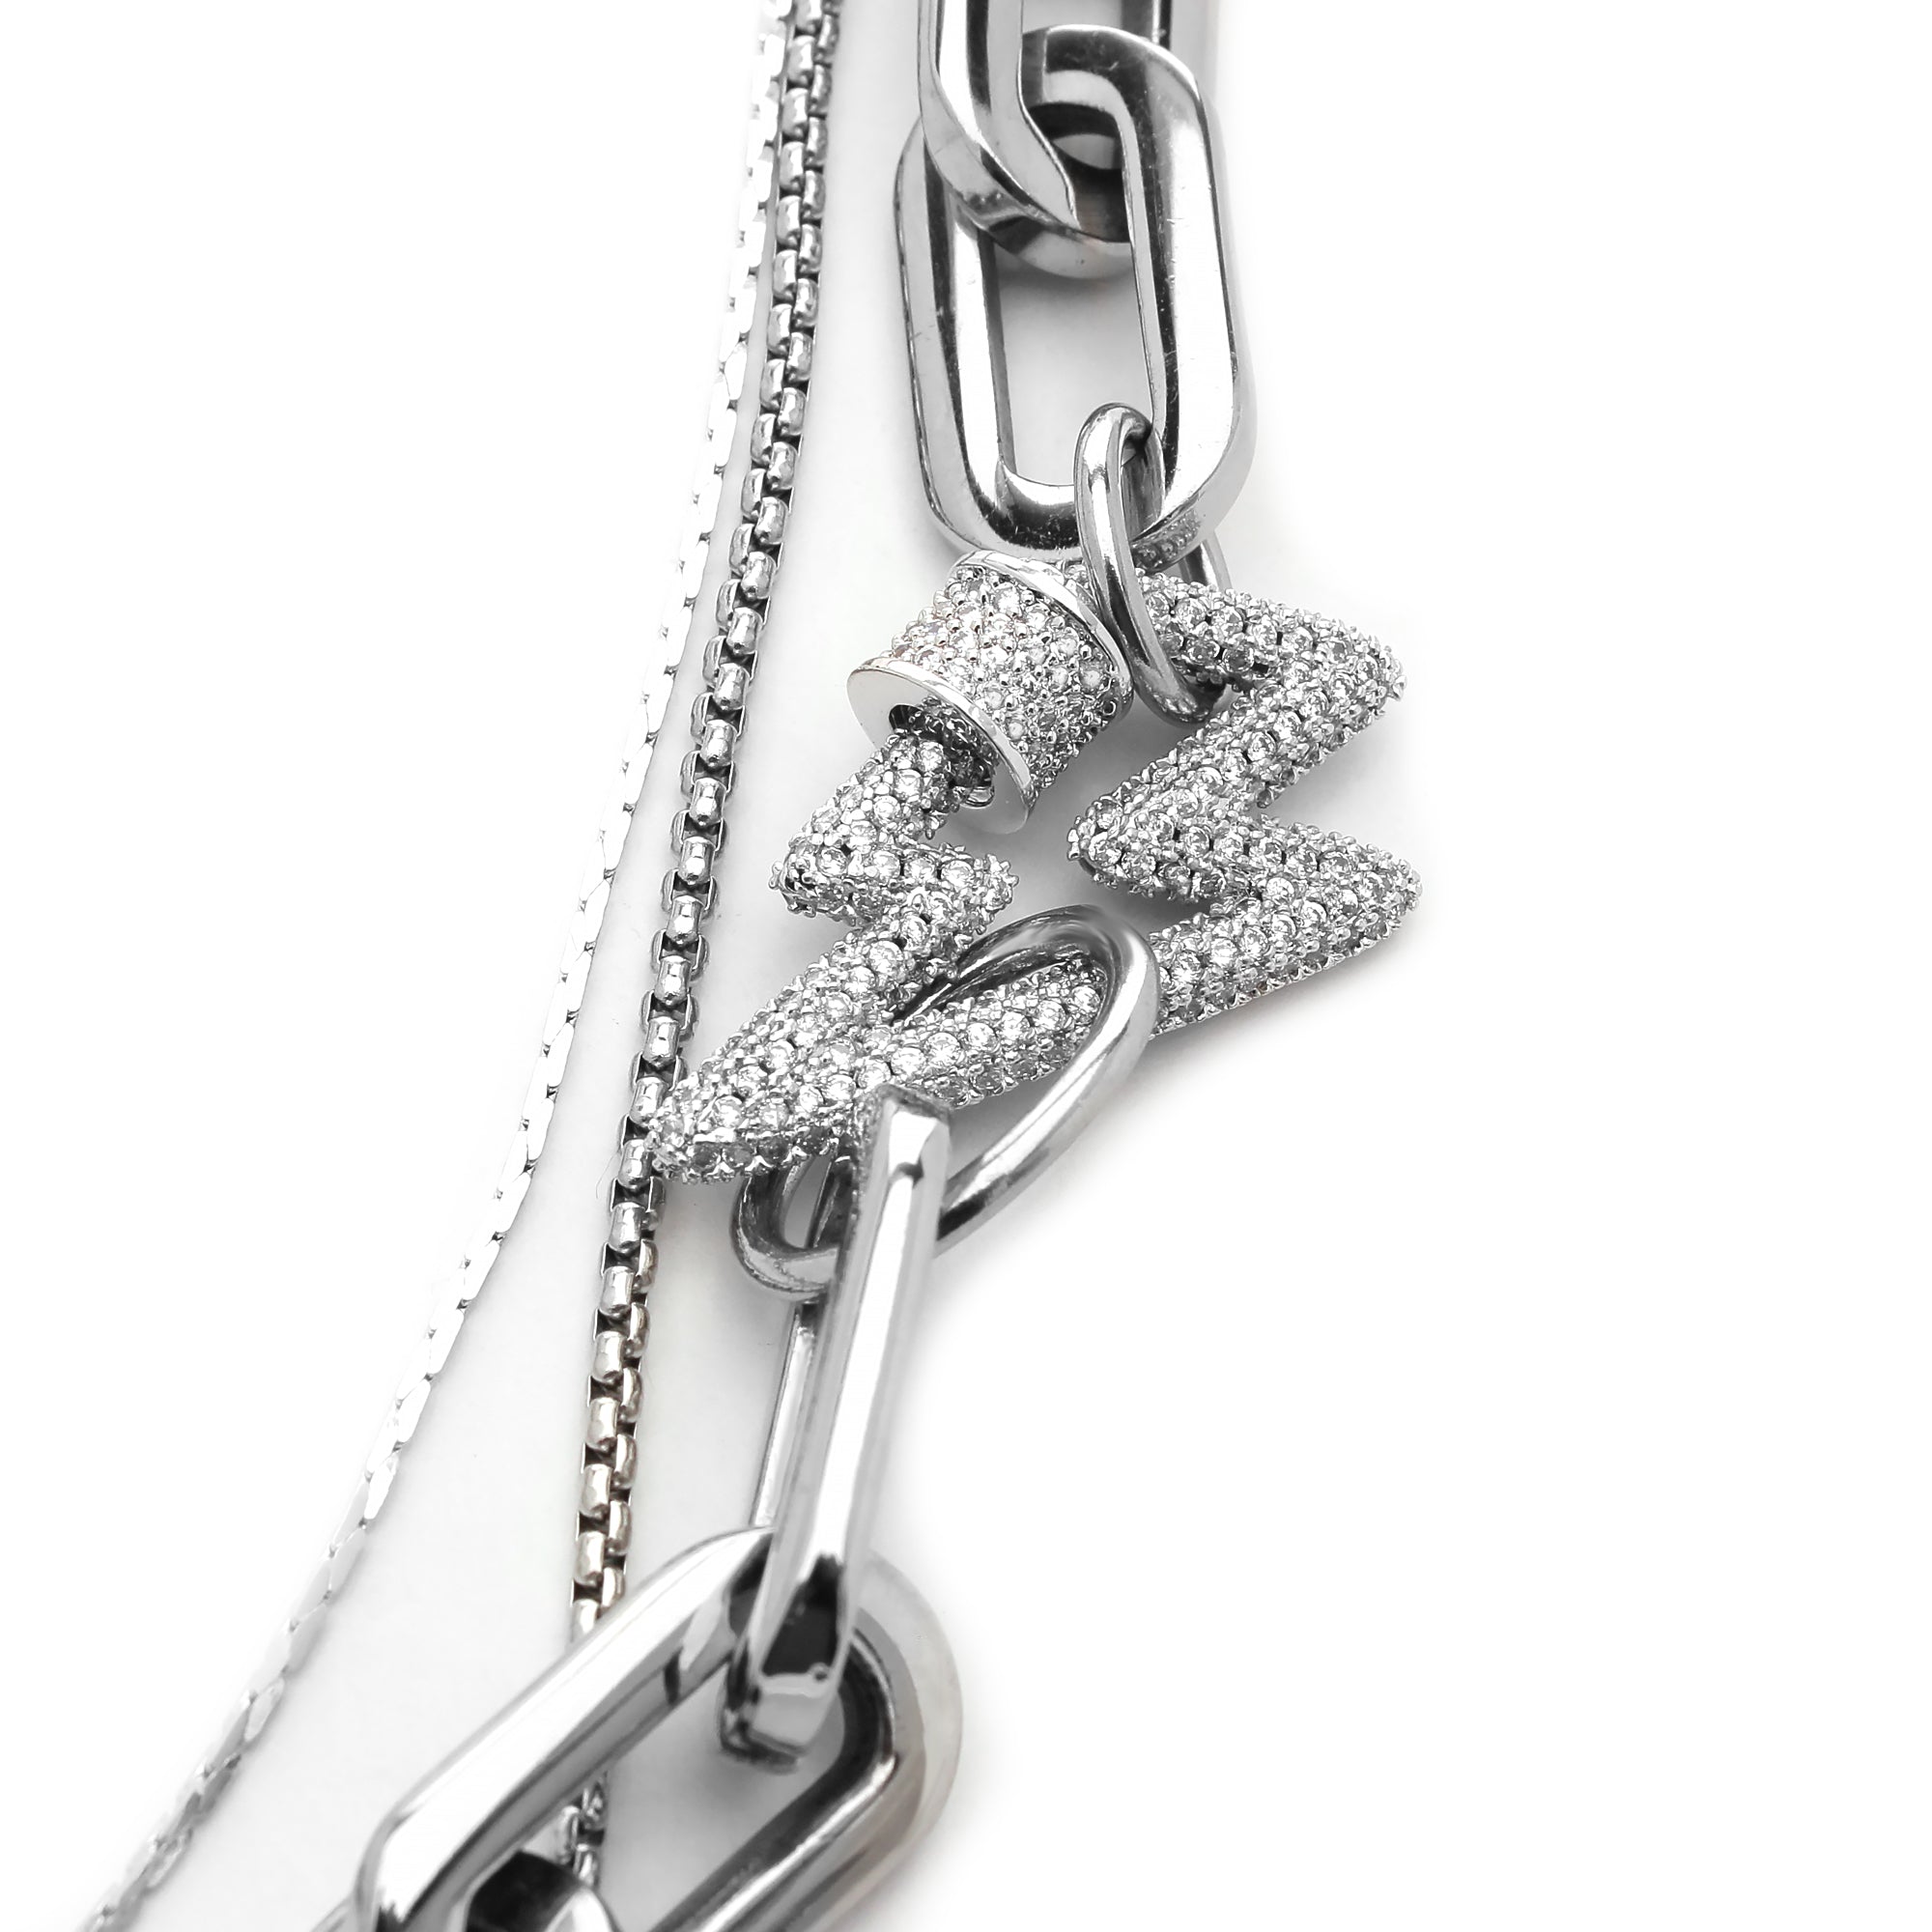 Louis Vuitton Padlock with Chain Necklace Single Chain Set